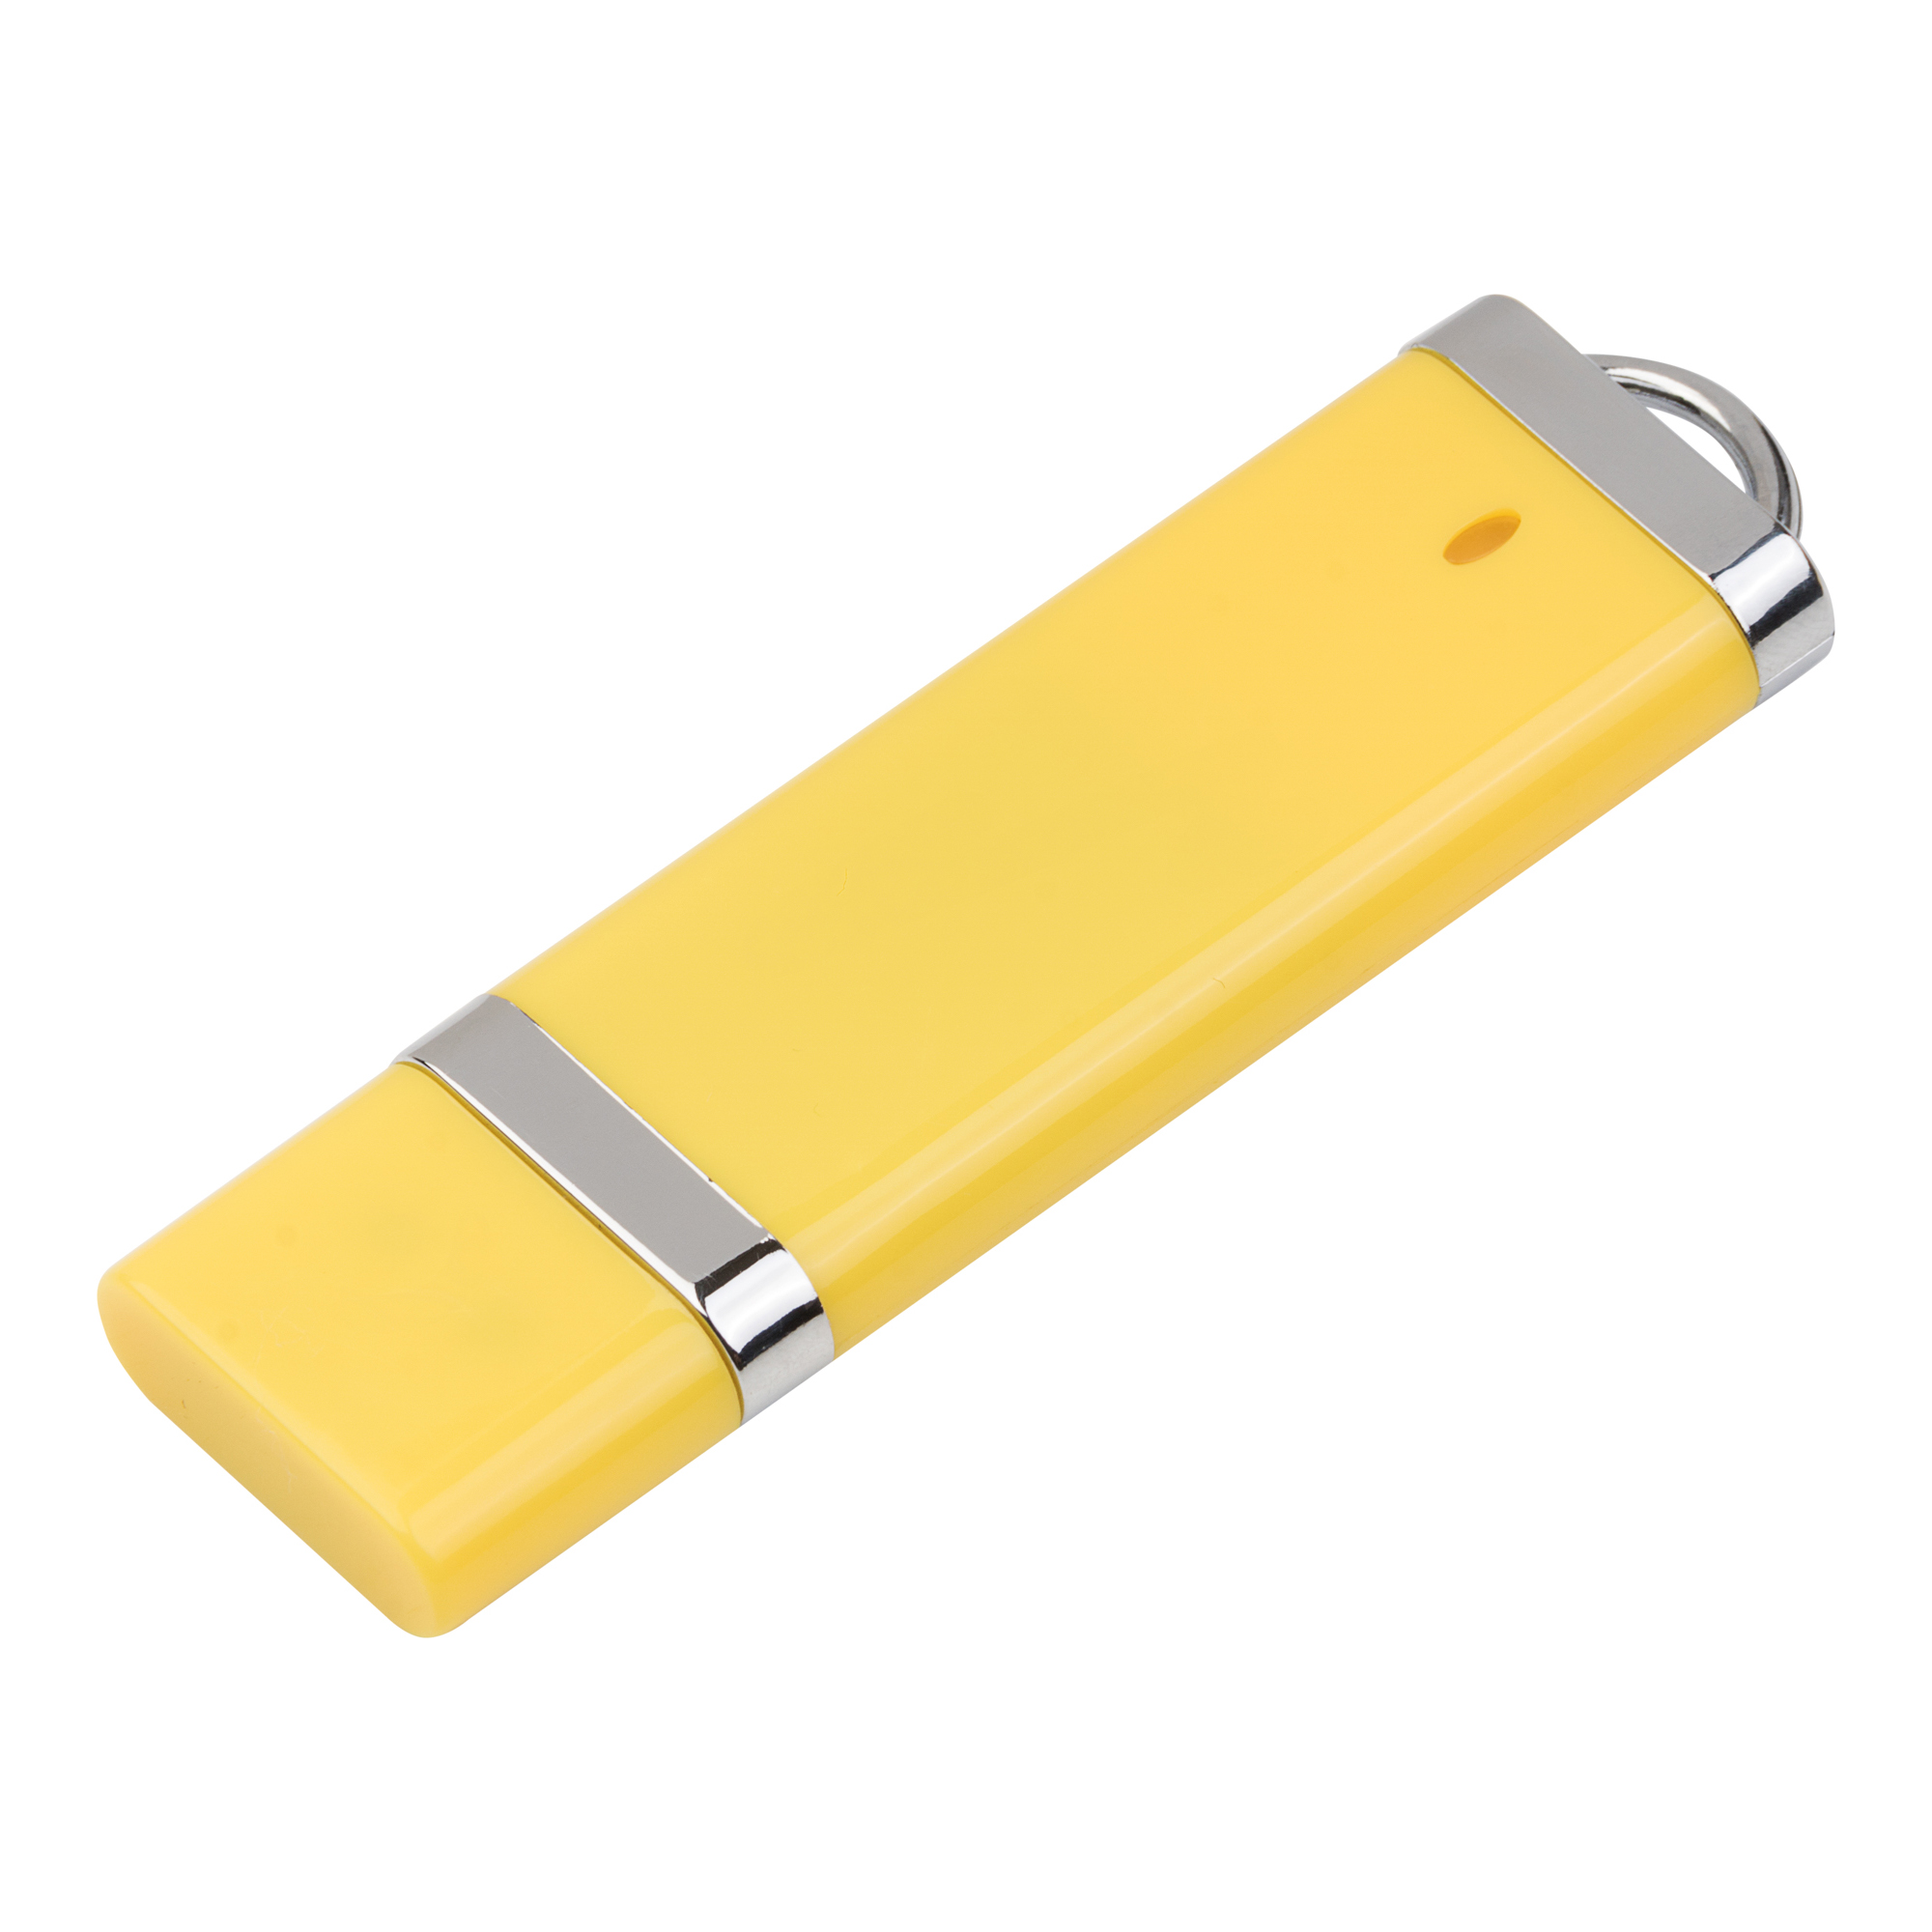 USB-флешка модель 116, (USB 3.0), объем памяти 128 GB, цвет желтый